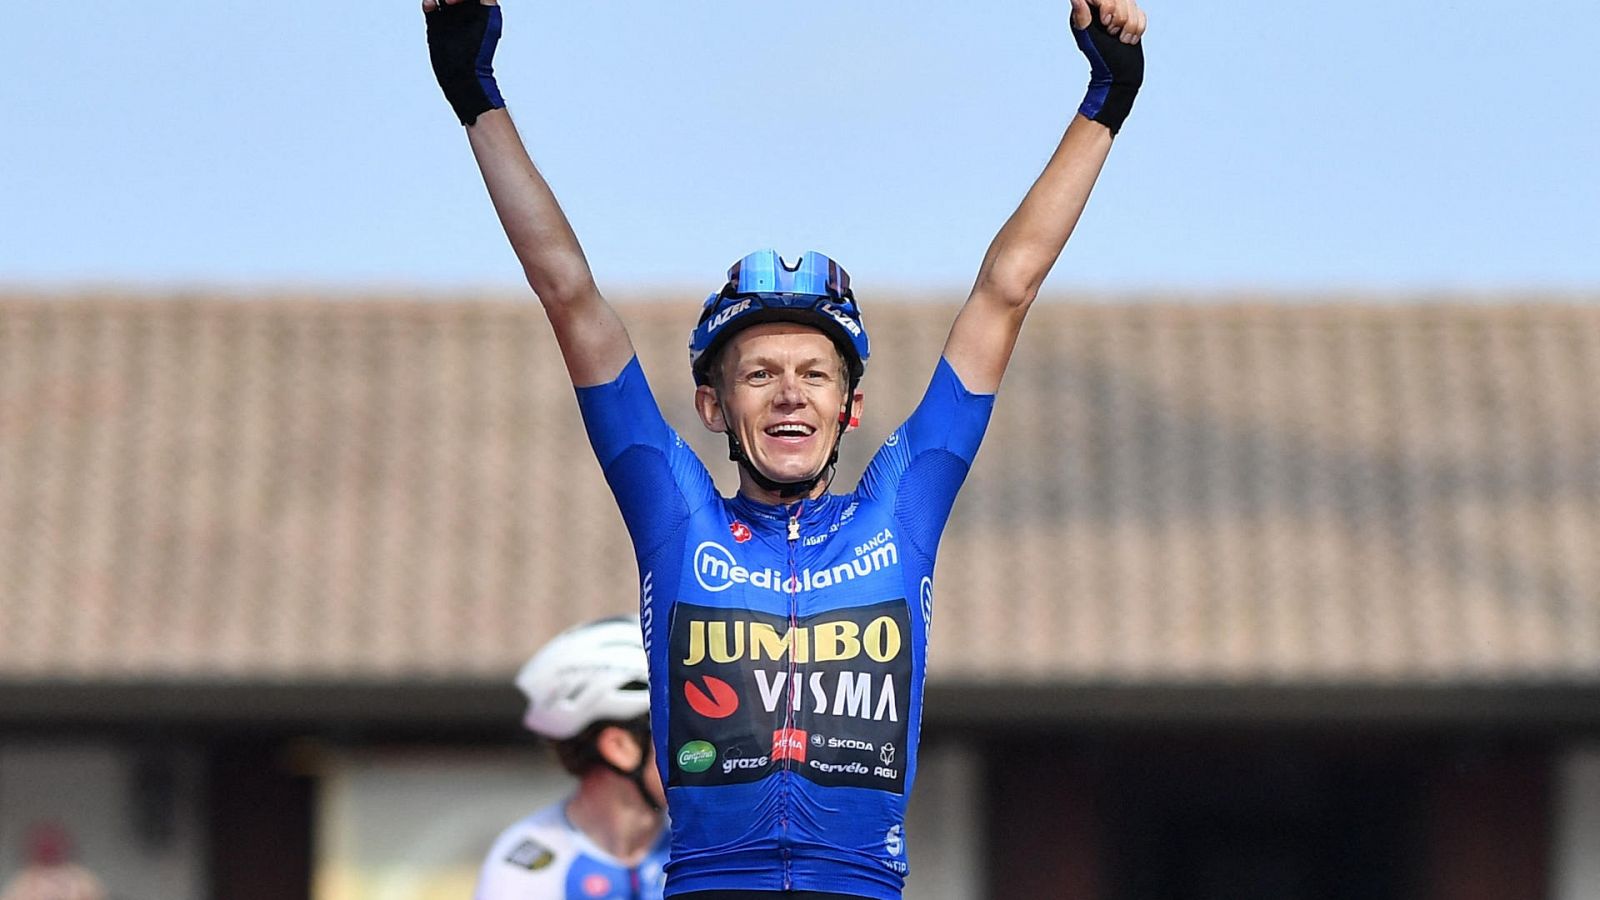 Koen Bouwman (Jumbo) ha ganado la 19ª etapa del Giro